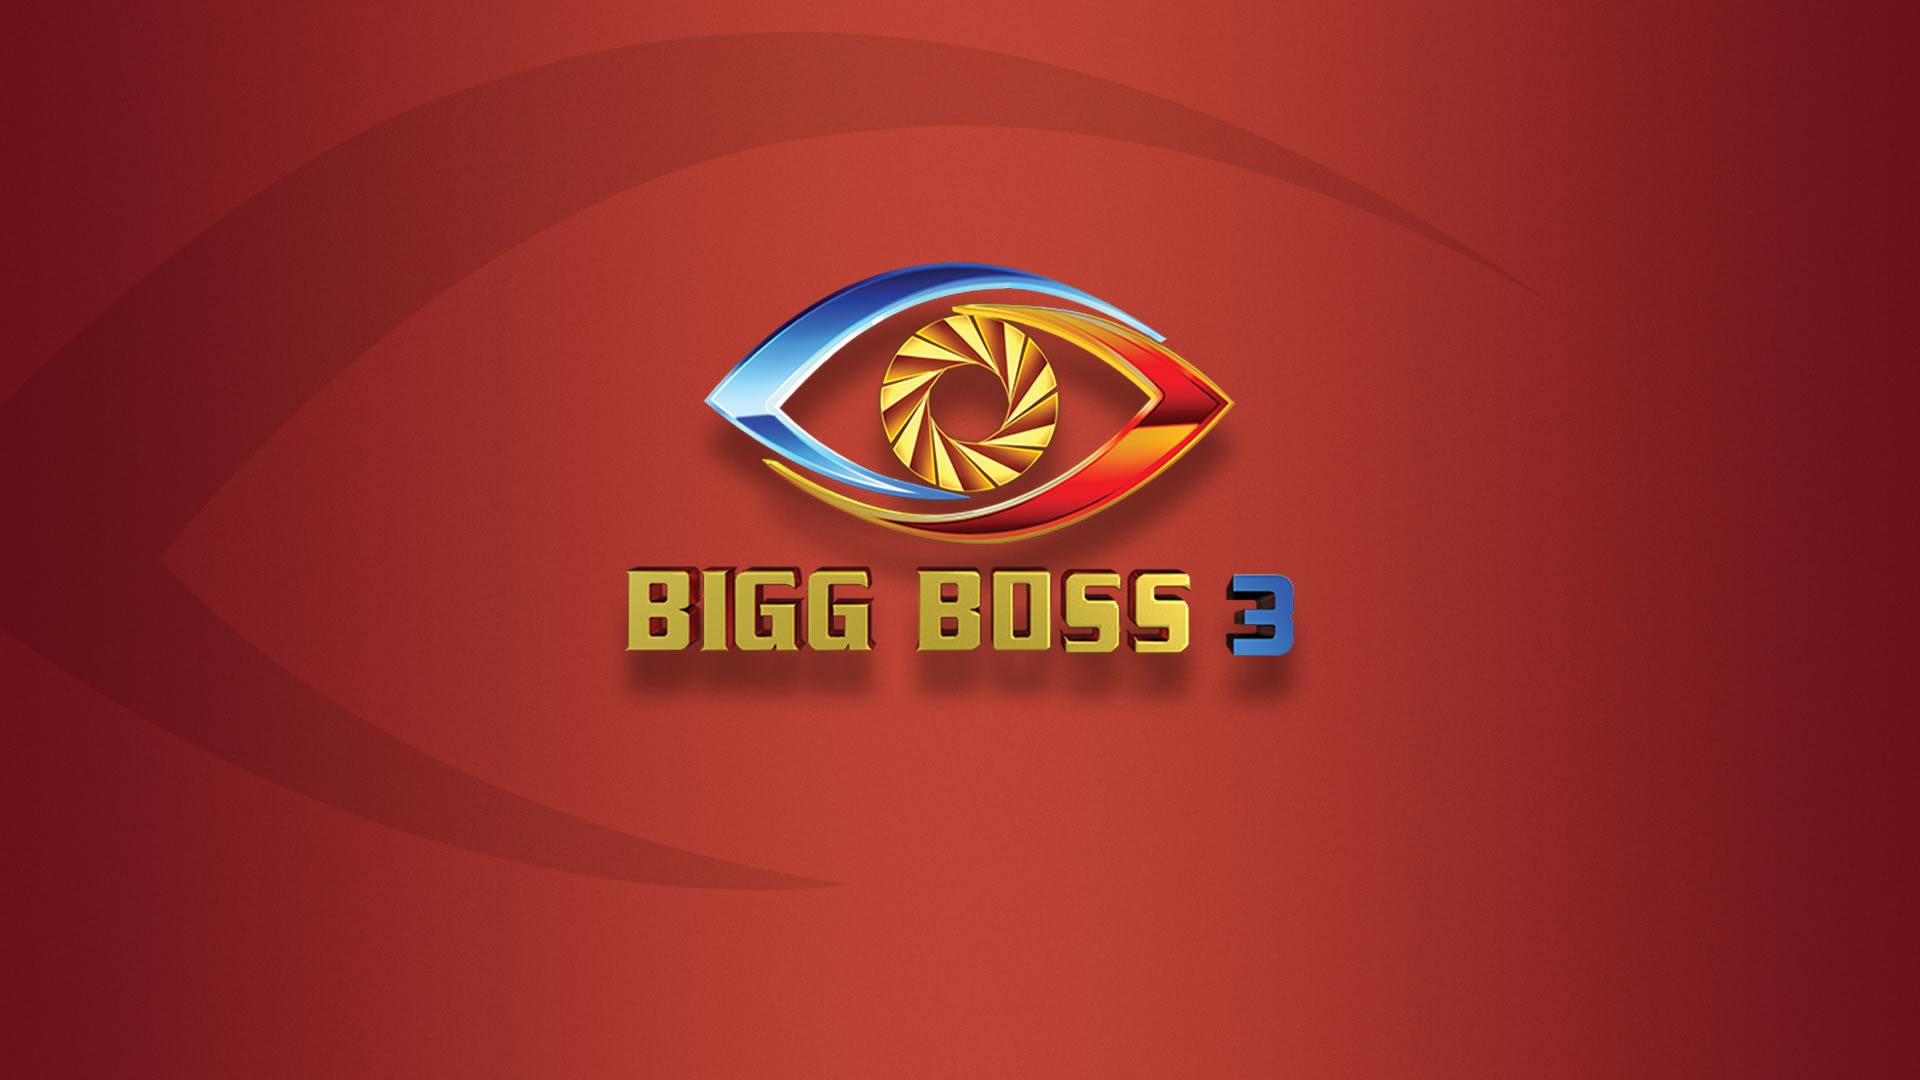 bigg boss 3 telugu hotstar